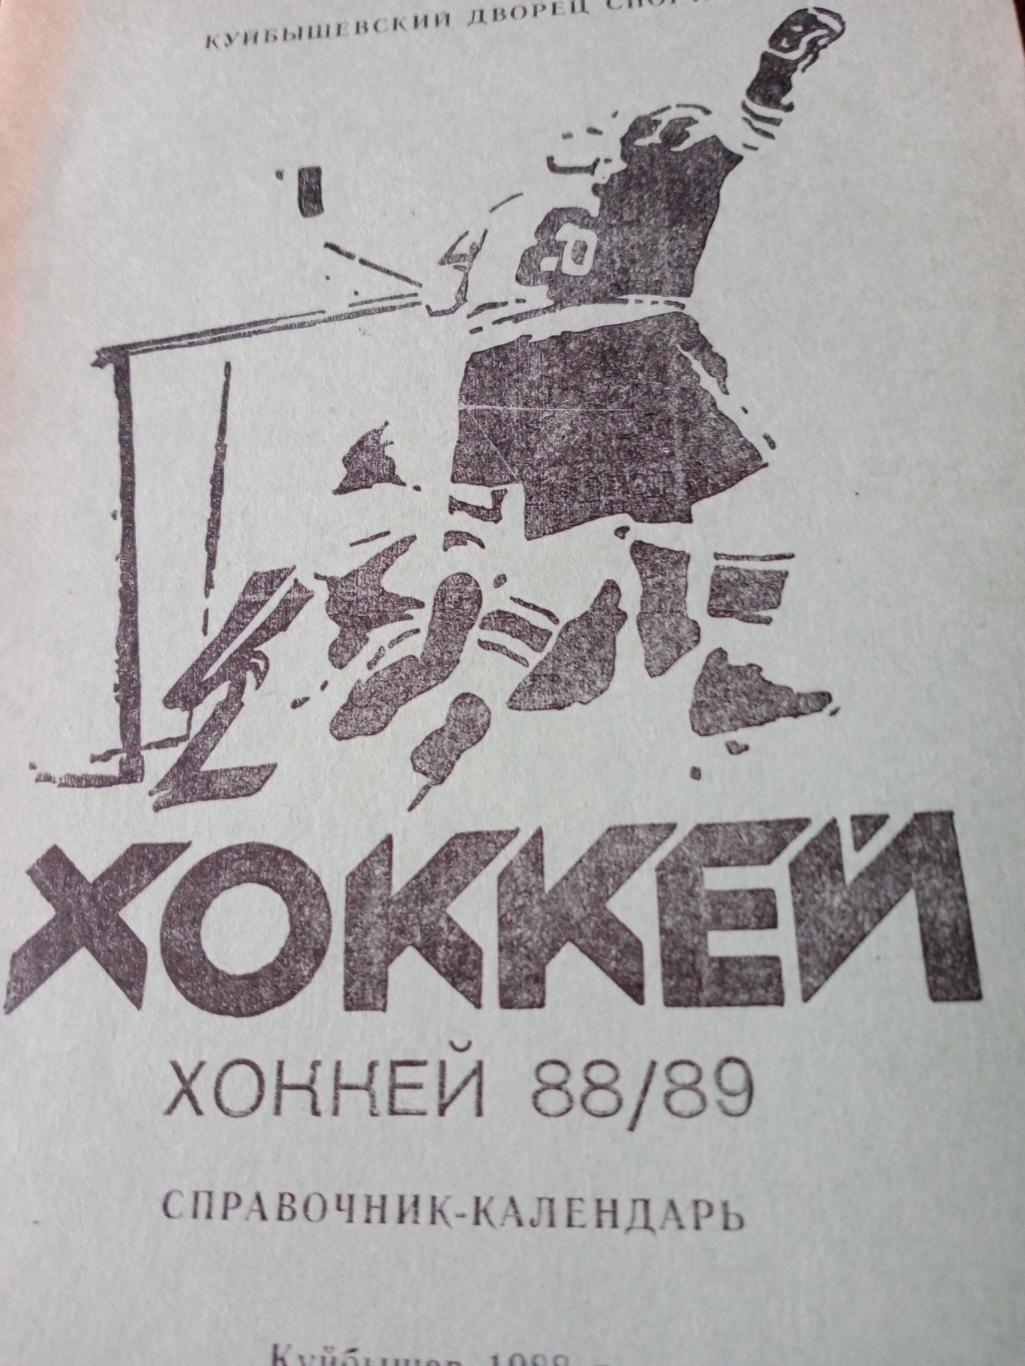 Хоккей. Куйбышев - 1988/89